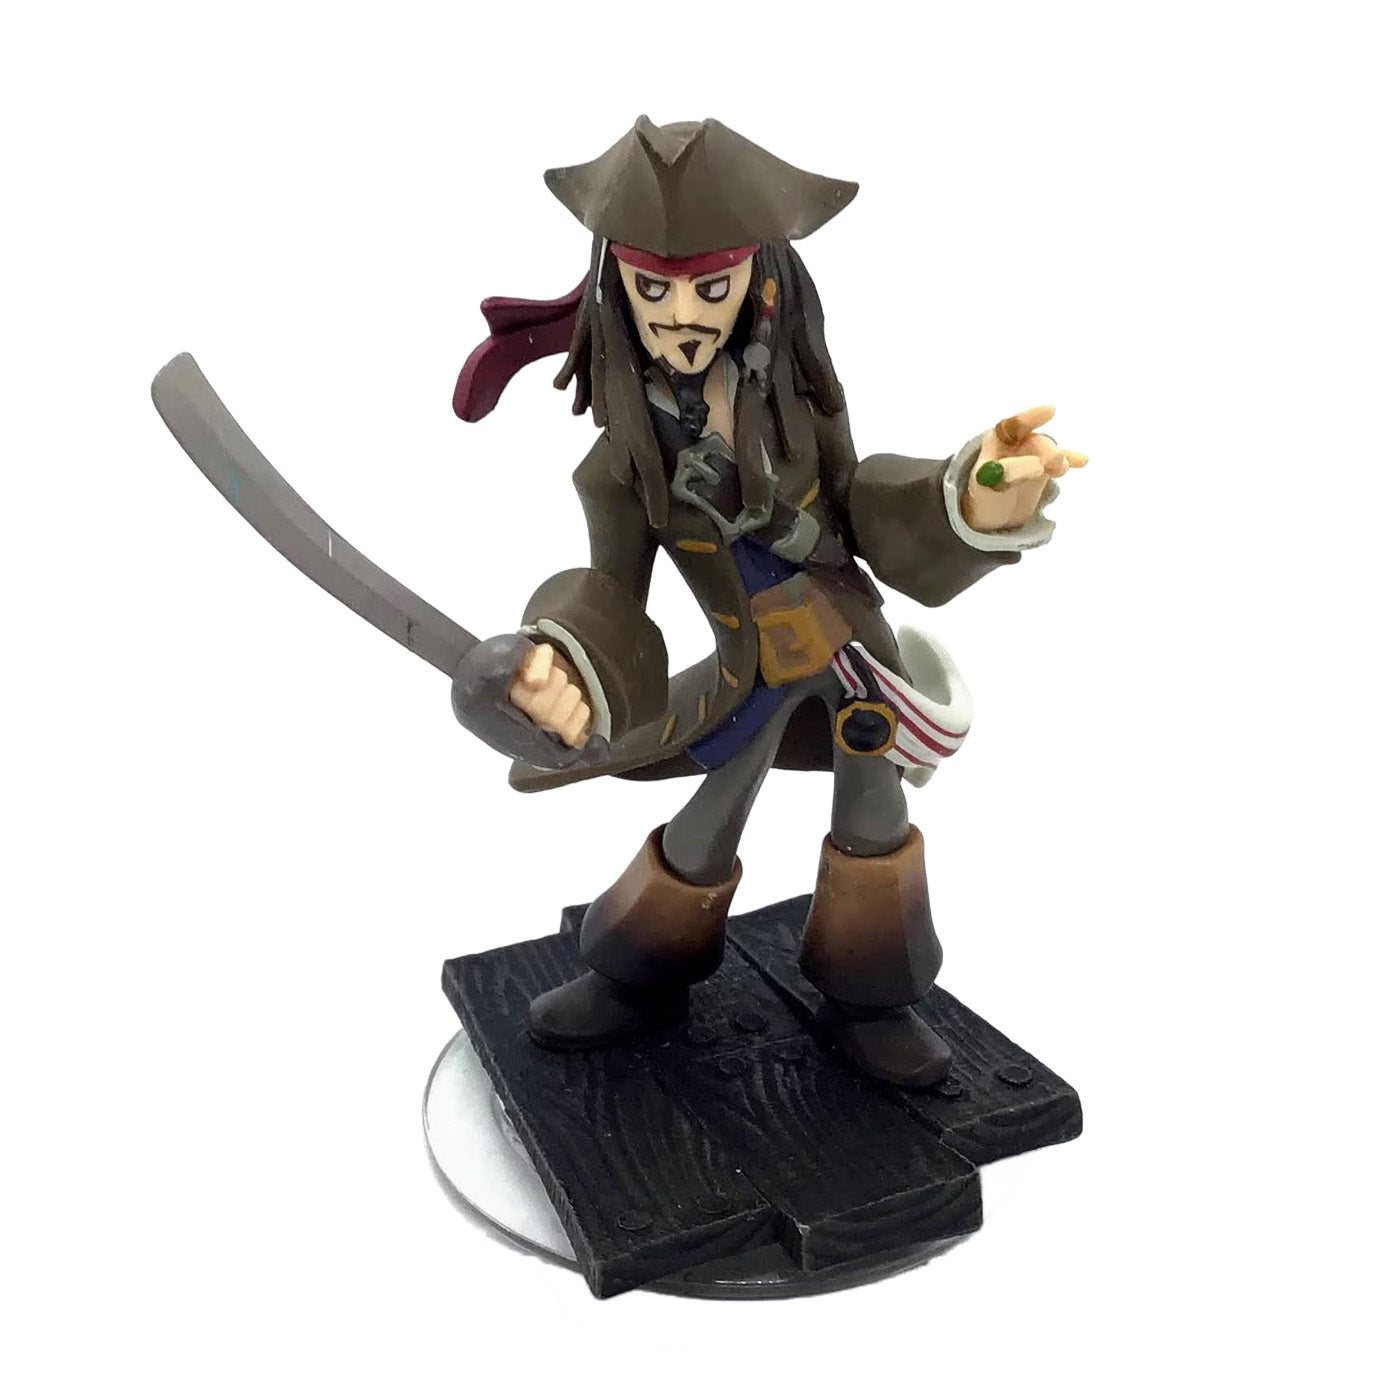 Disney Infinity 1.0 Character: Captain Jack Sparrow